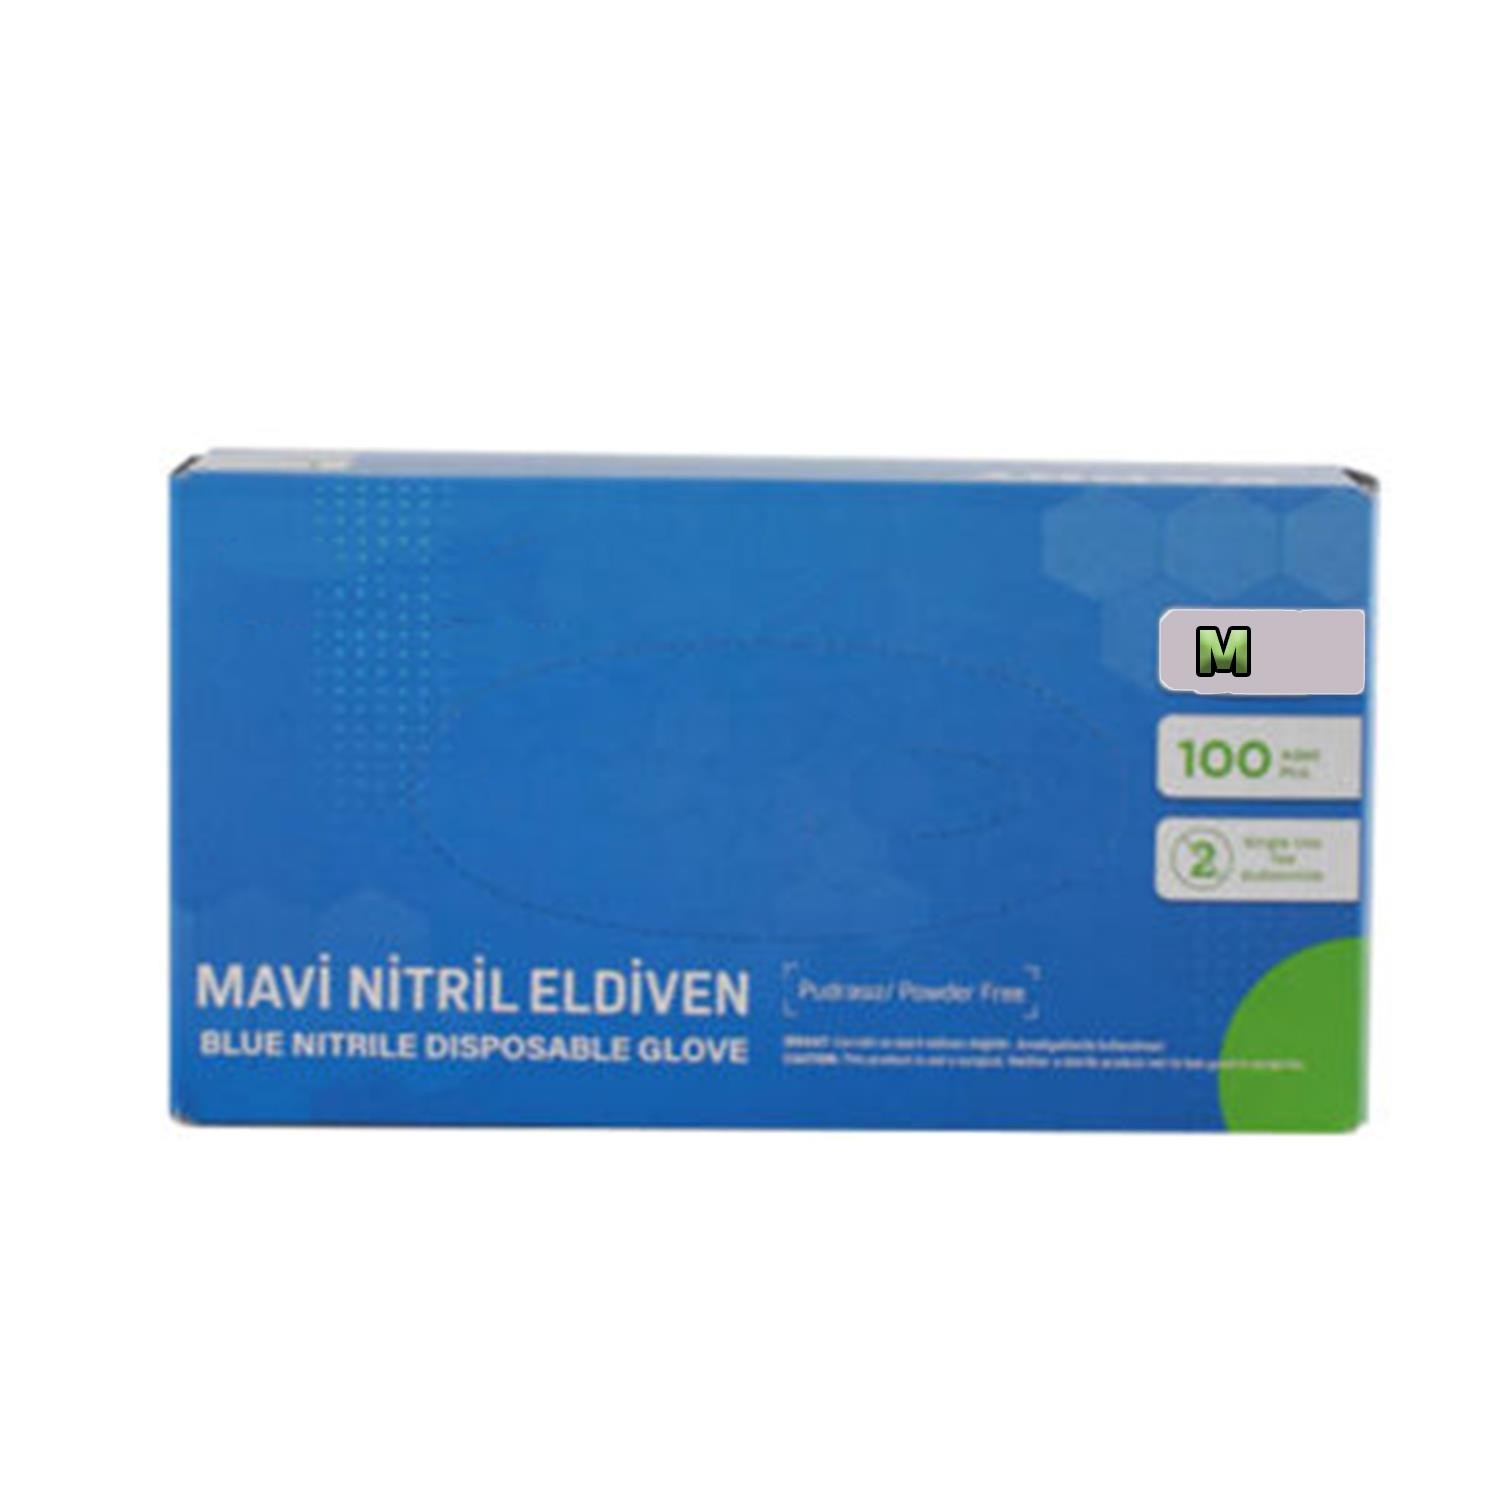 Handy Mavi Nitril Muayene Eldiveni M Beden Pudrasız Eldiven 100 Adet (50 ÇİFT)